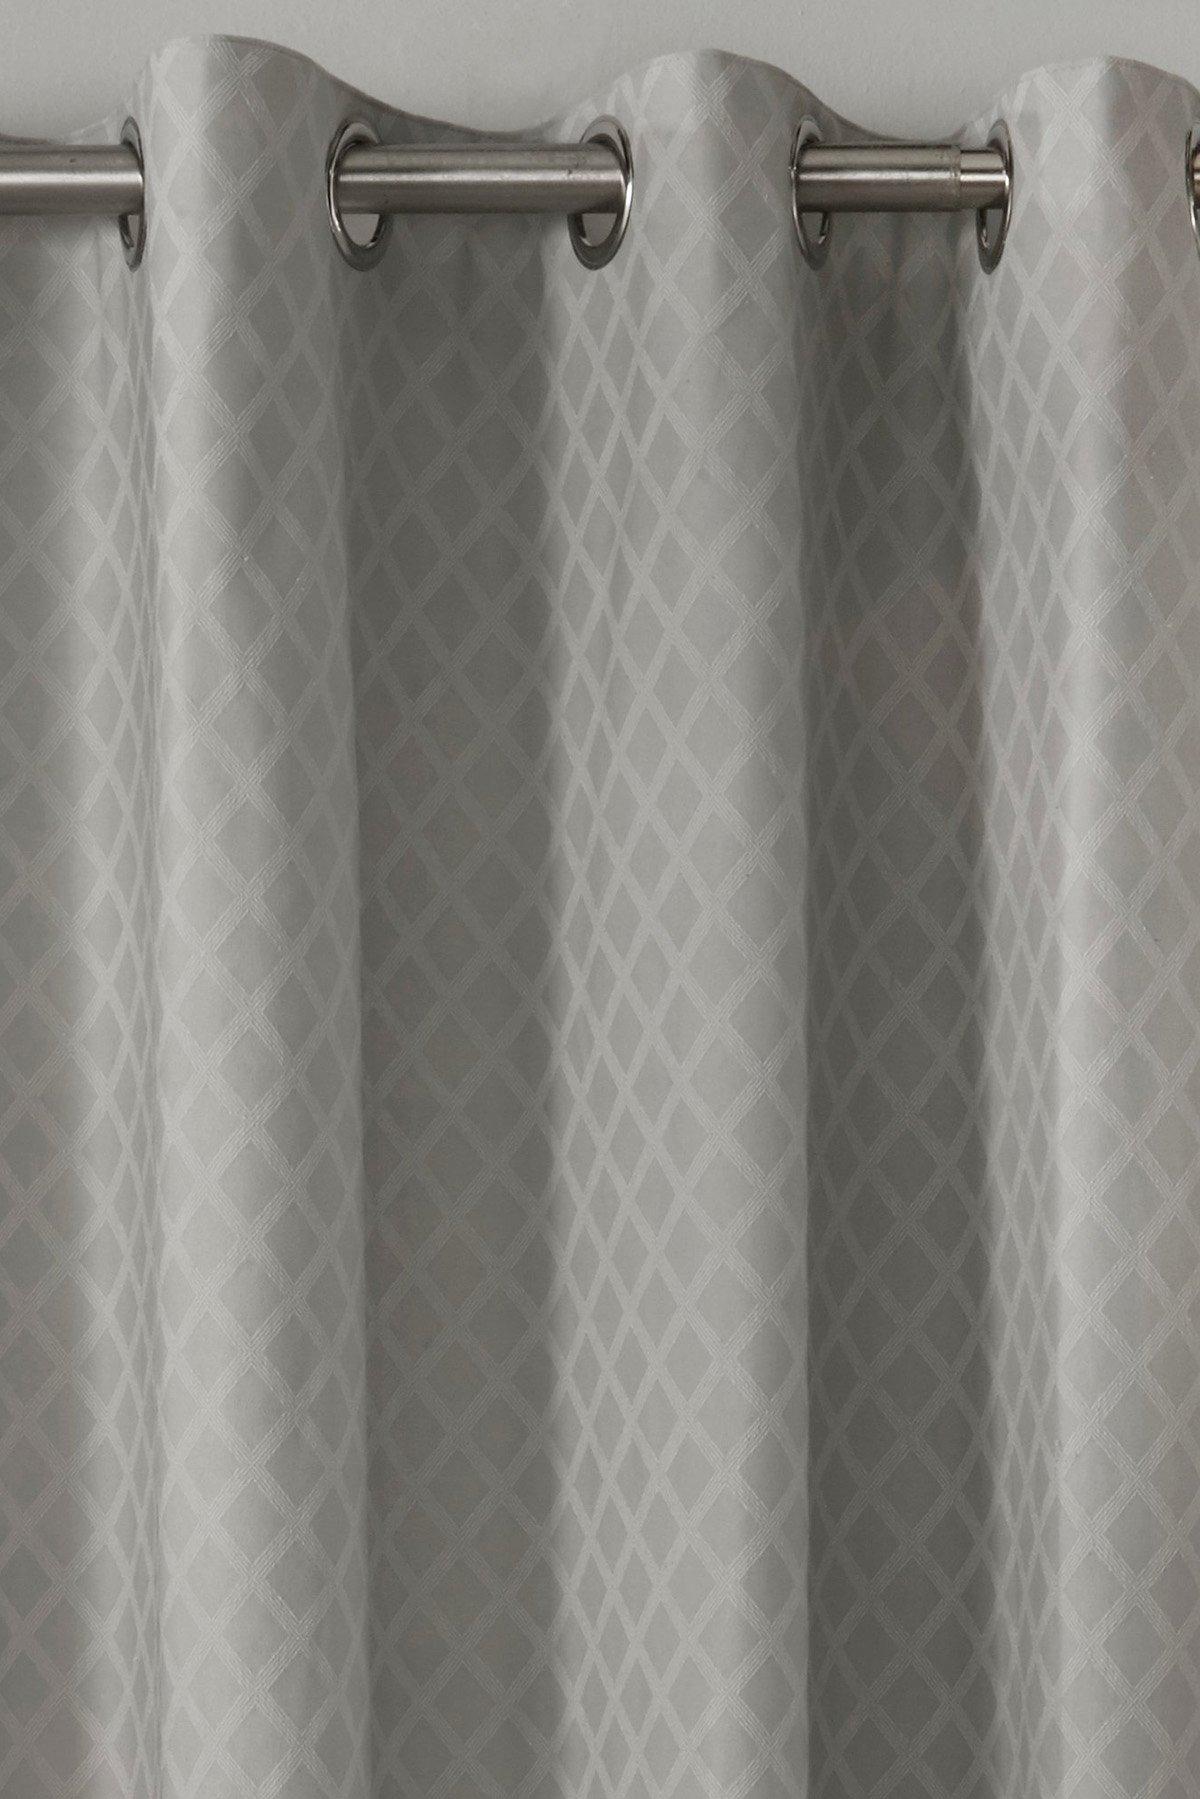 'Croma' Geometric Jacquard Pair of Eyelet Curtains